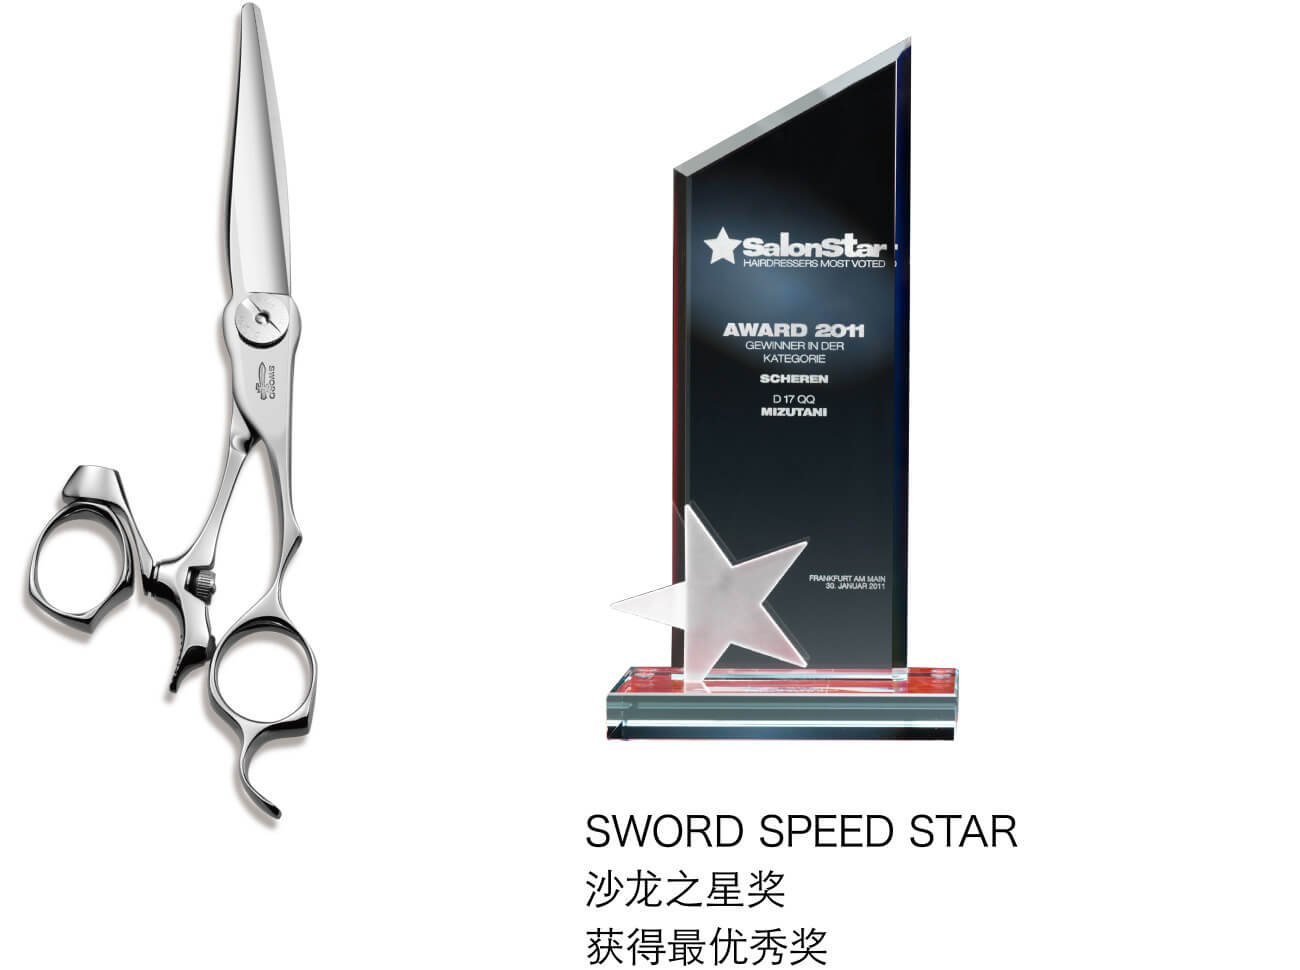 SWORD SPEED STAR 沙龙之星奖 获得最优秀奖